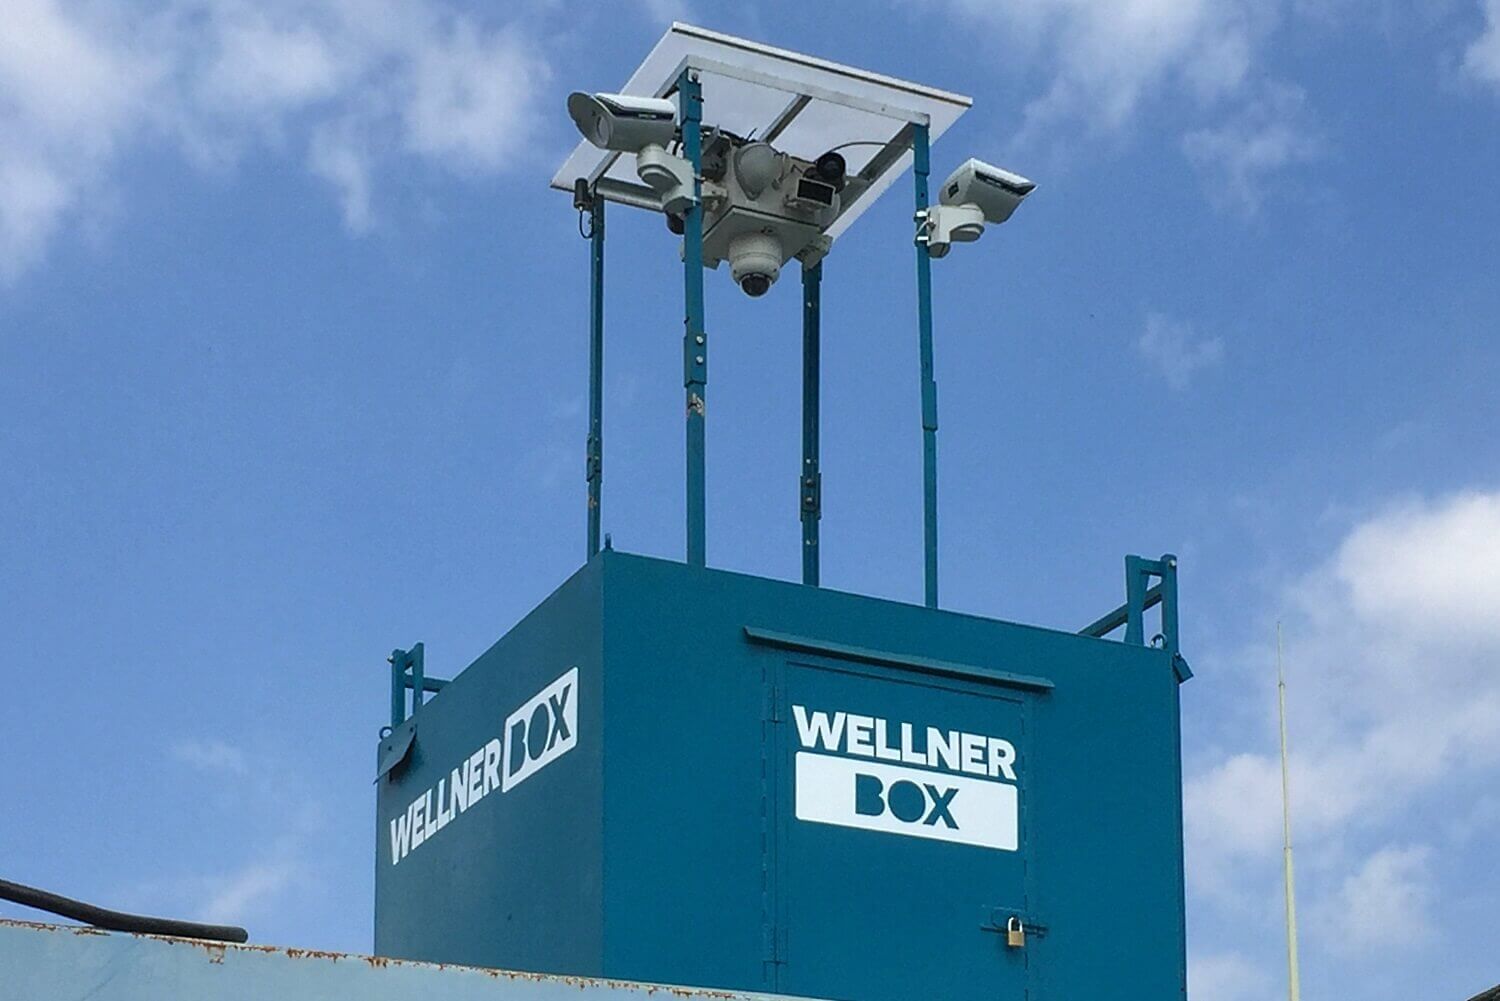 WellnerBOX with long-range detectors